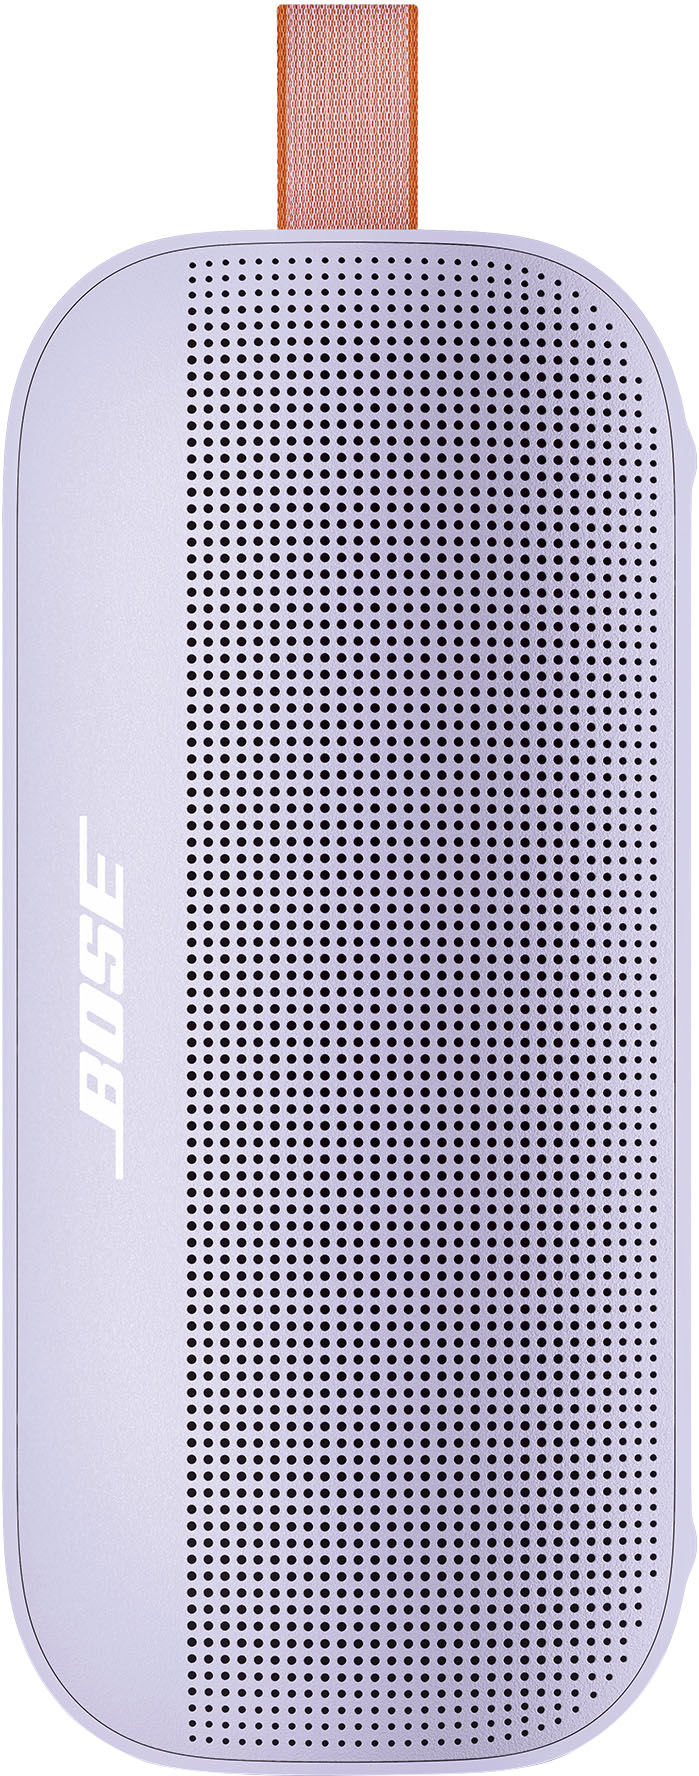 Left View: Bose - SoundLink Flex Portable Bluetooth Speaker with Waterproof/Dustproof Design - Chilled Lilac